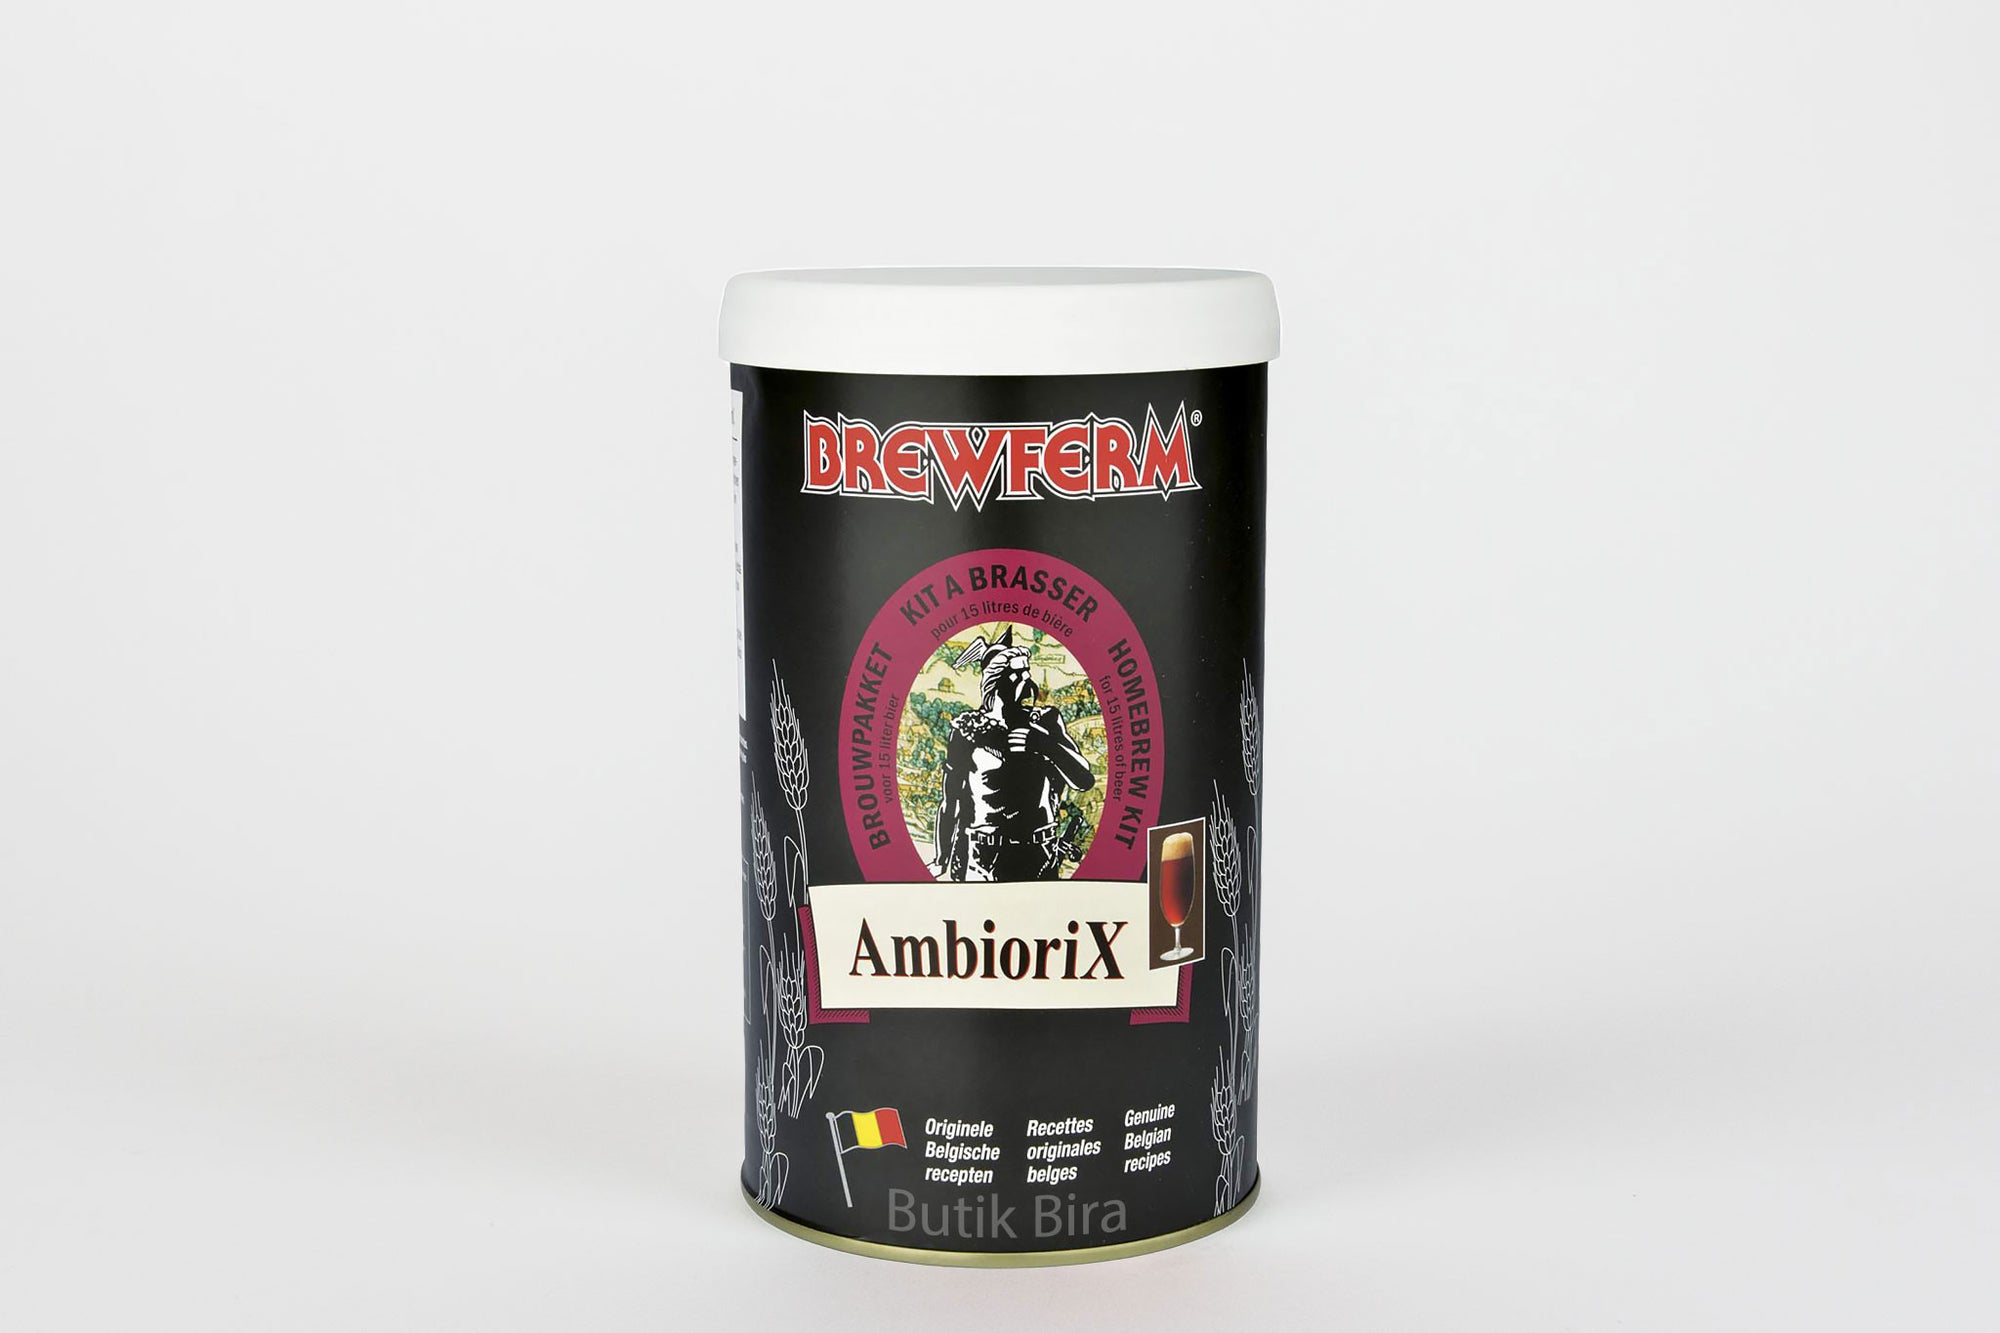 Brewferm Ambiorix Evde Bira Yapımı Kiti - Butik Bira